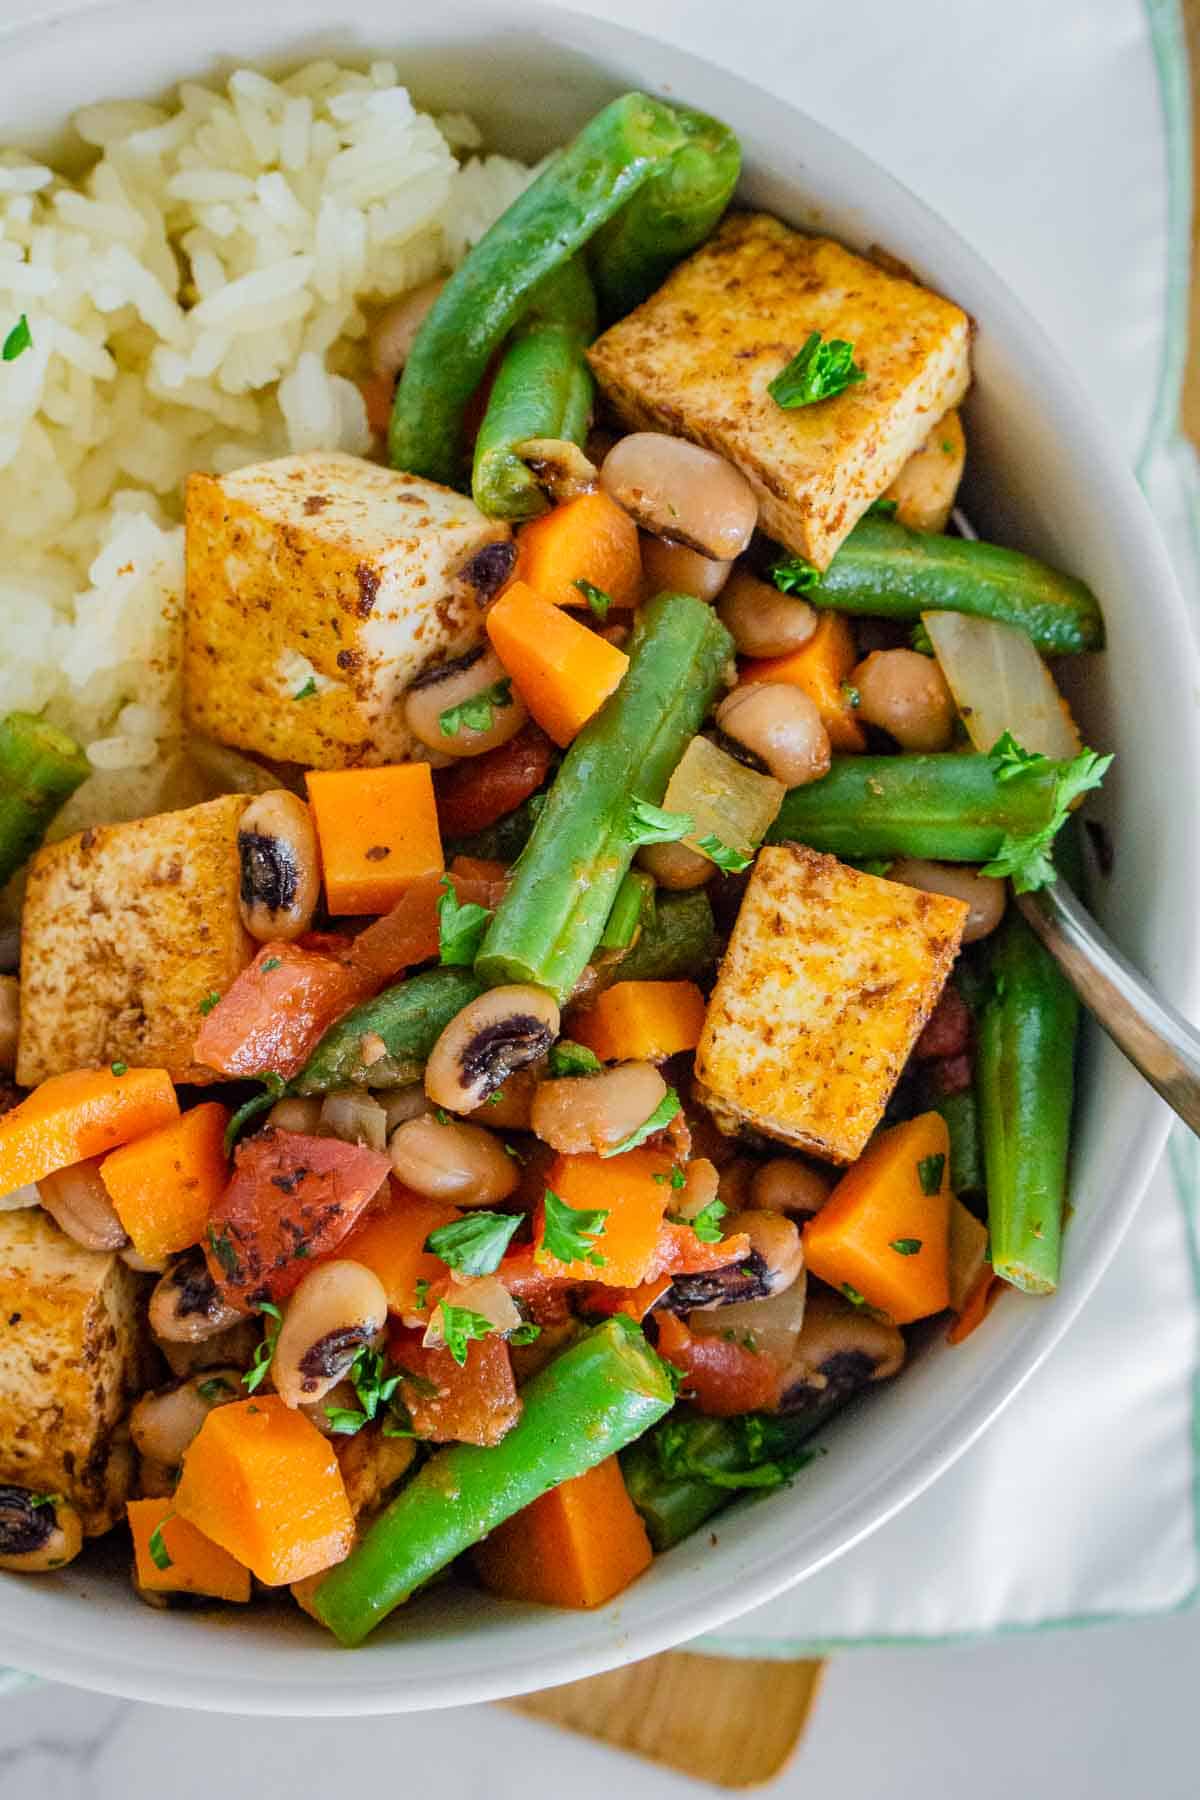 Vegan protein bowl with blackened tofu, black eyed peas, and veggies over rice.